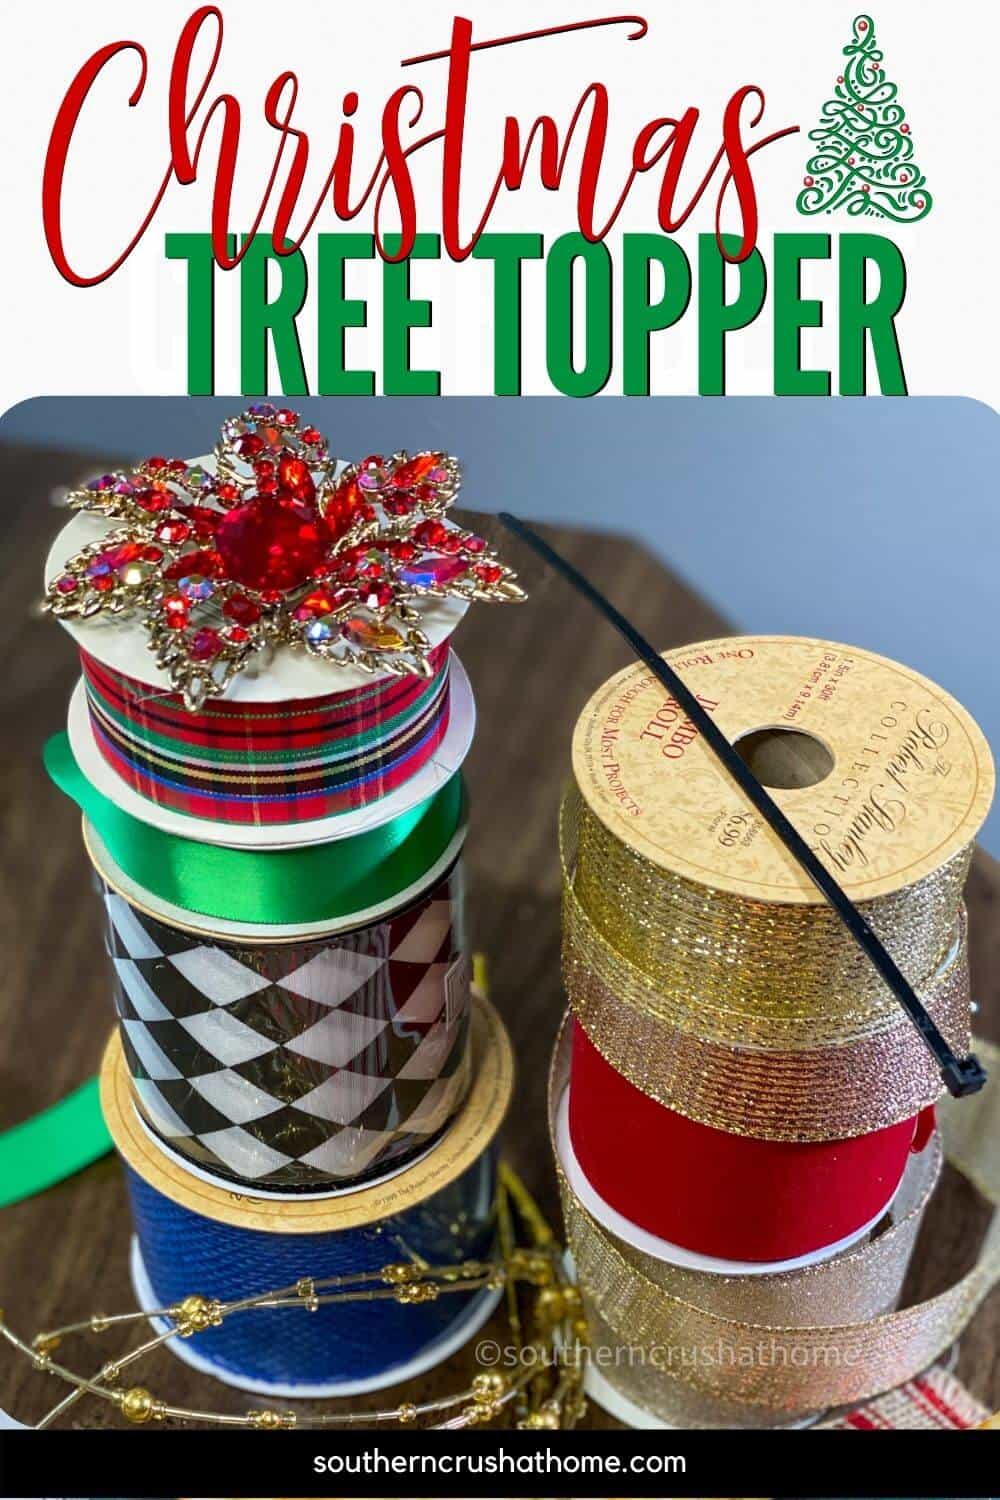 Christmas Tree Topper idea pin